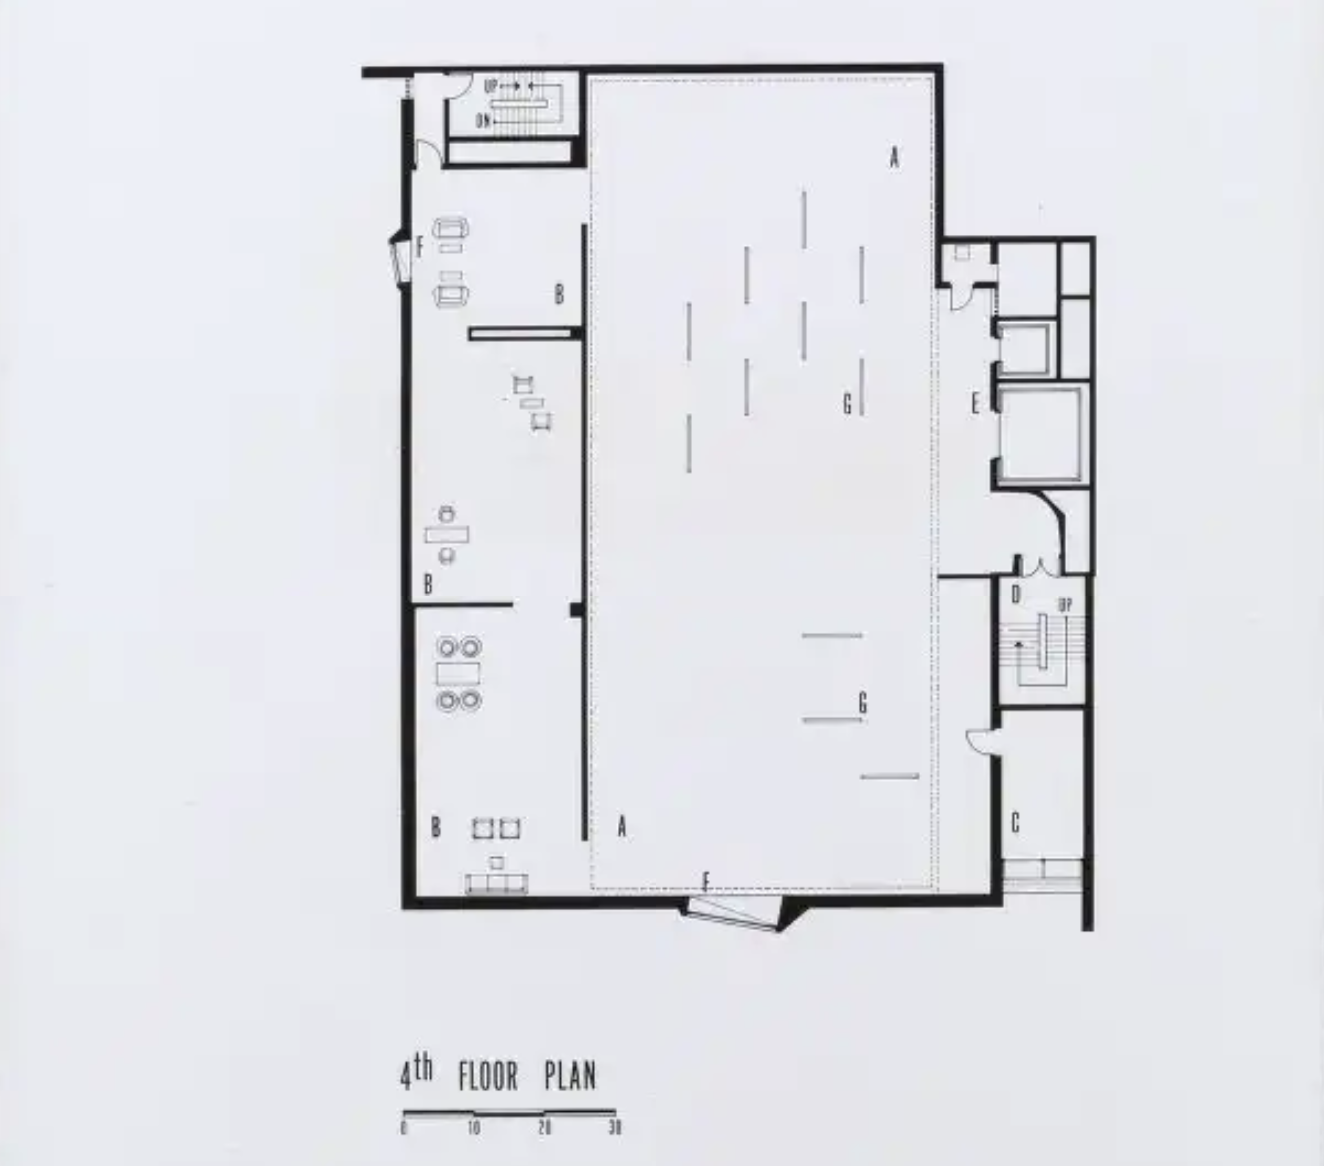 Fourth floor plan